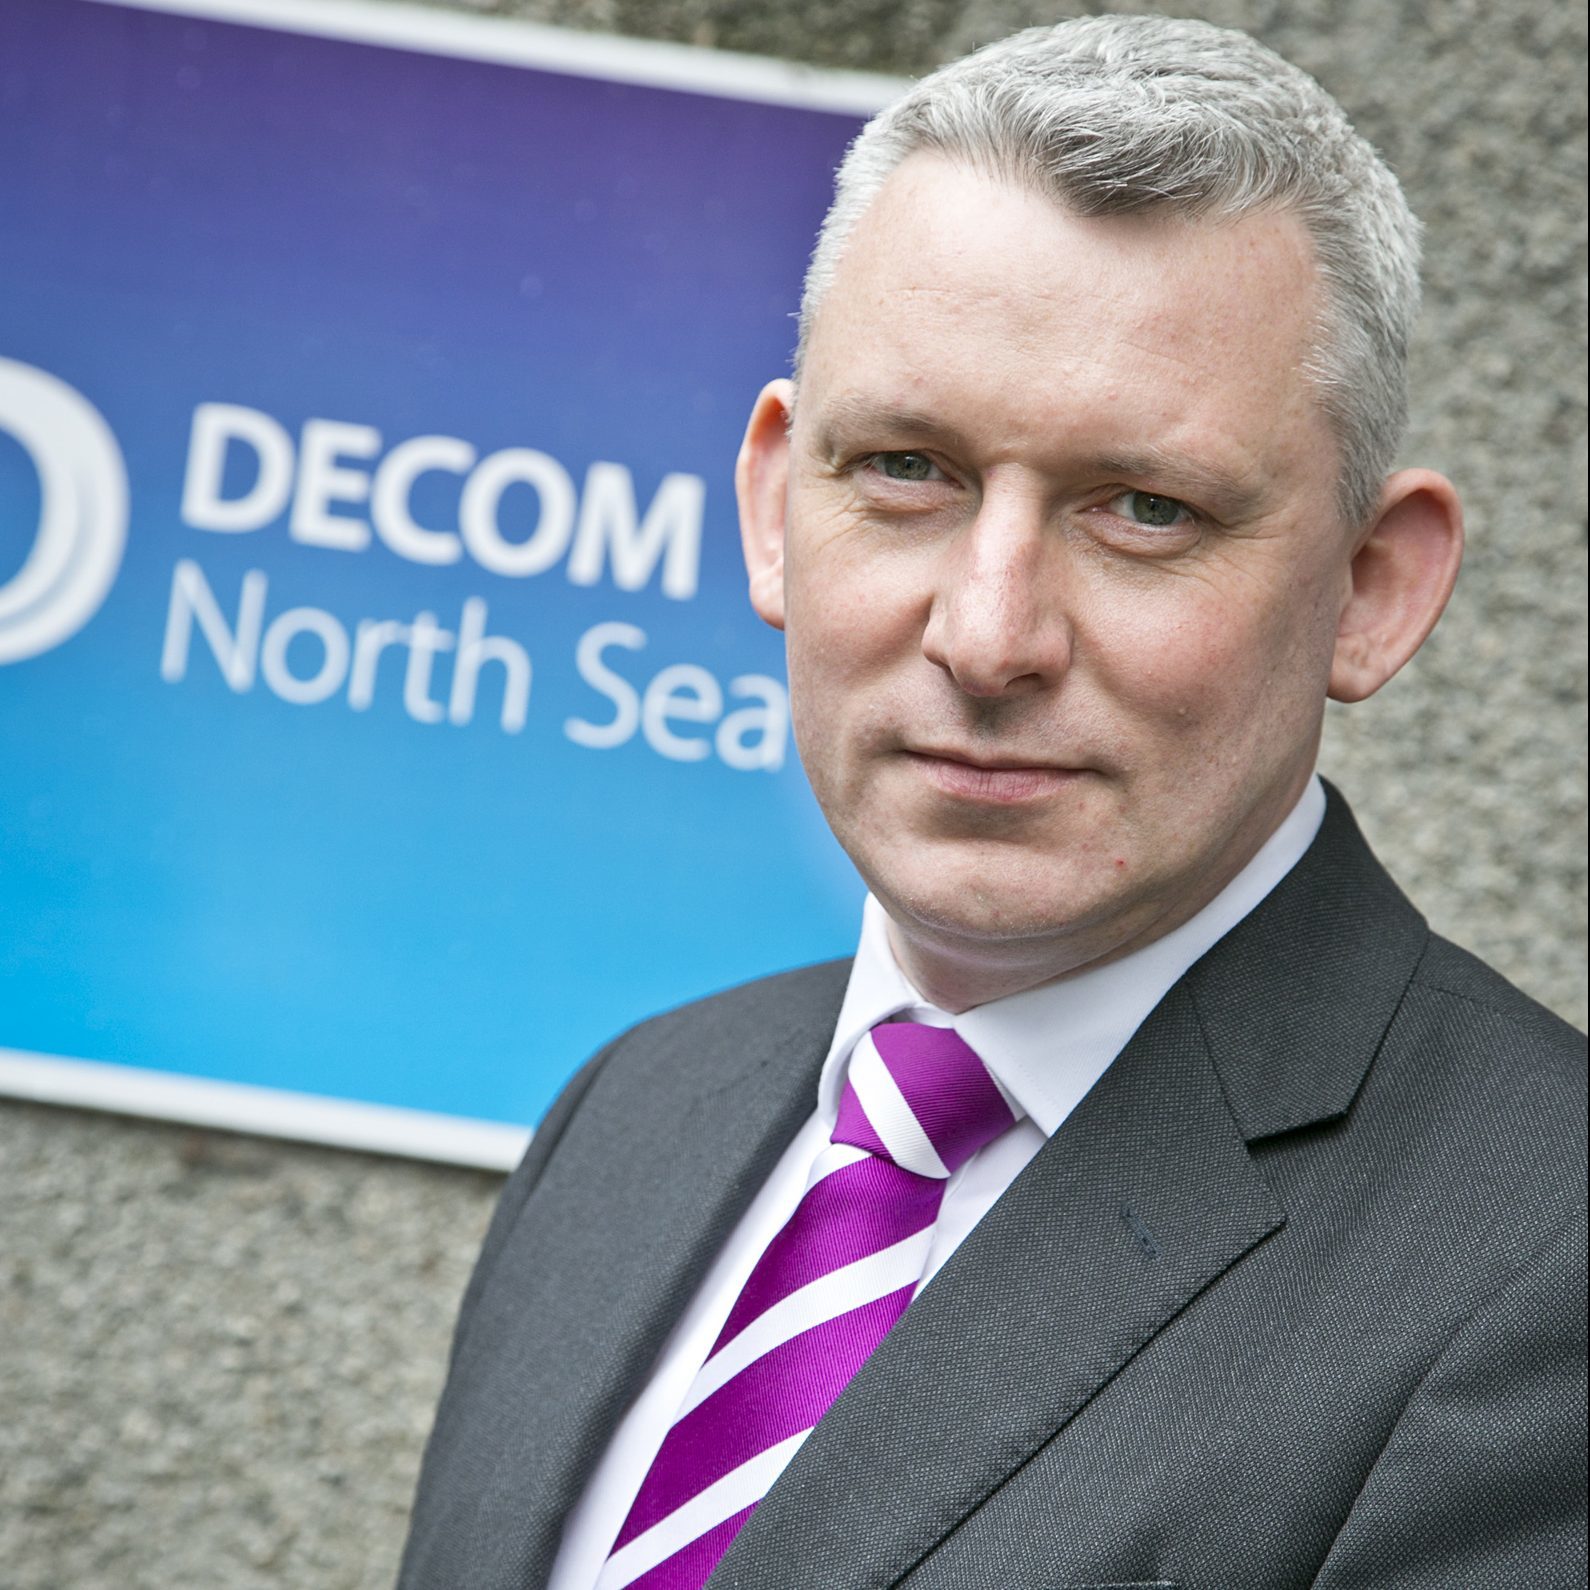 Decom North Sea chief executive Roger Esson